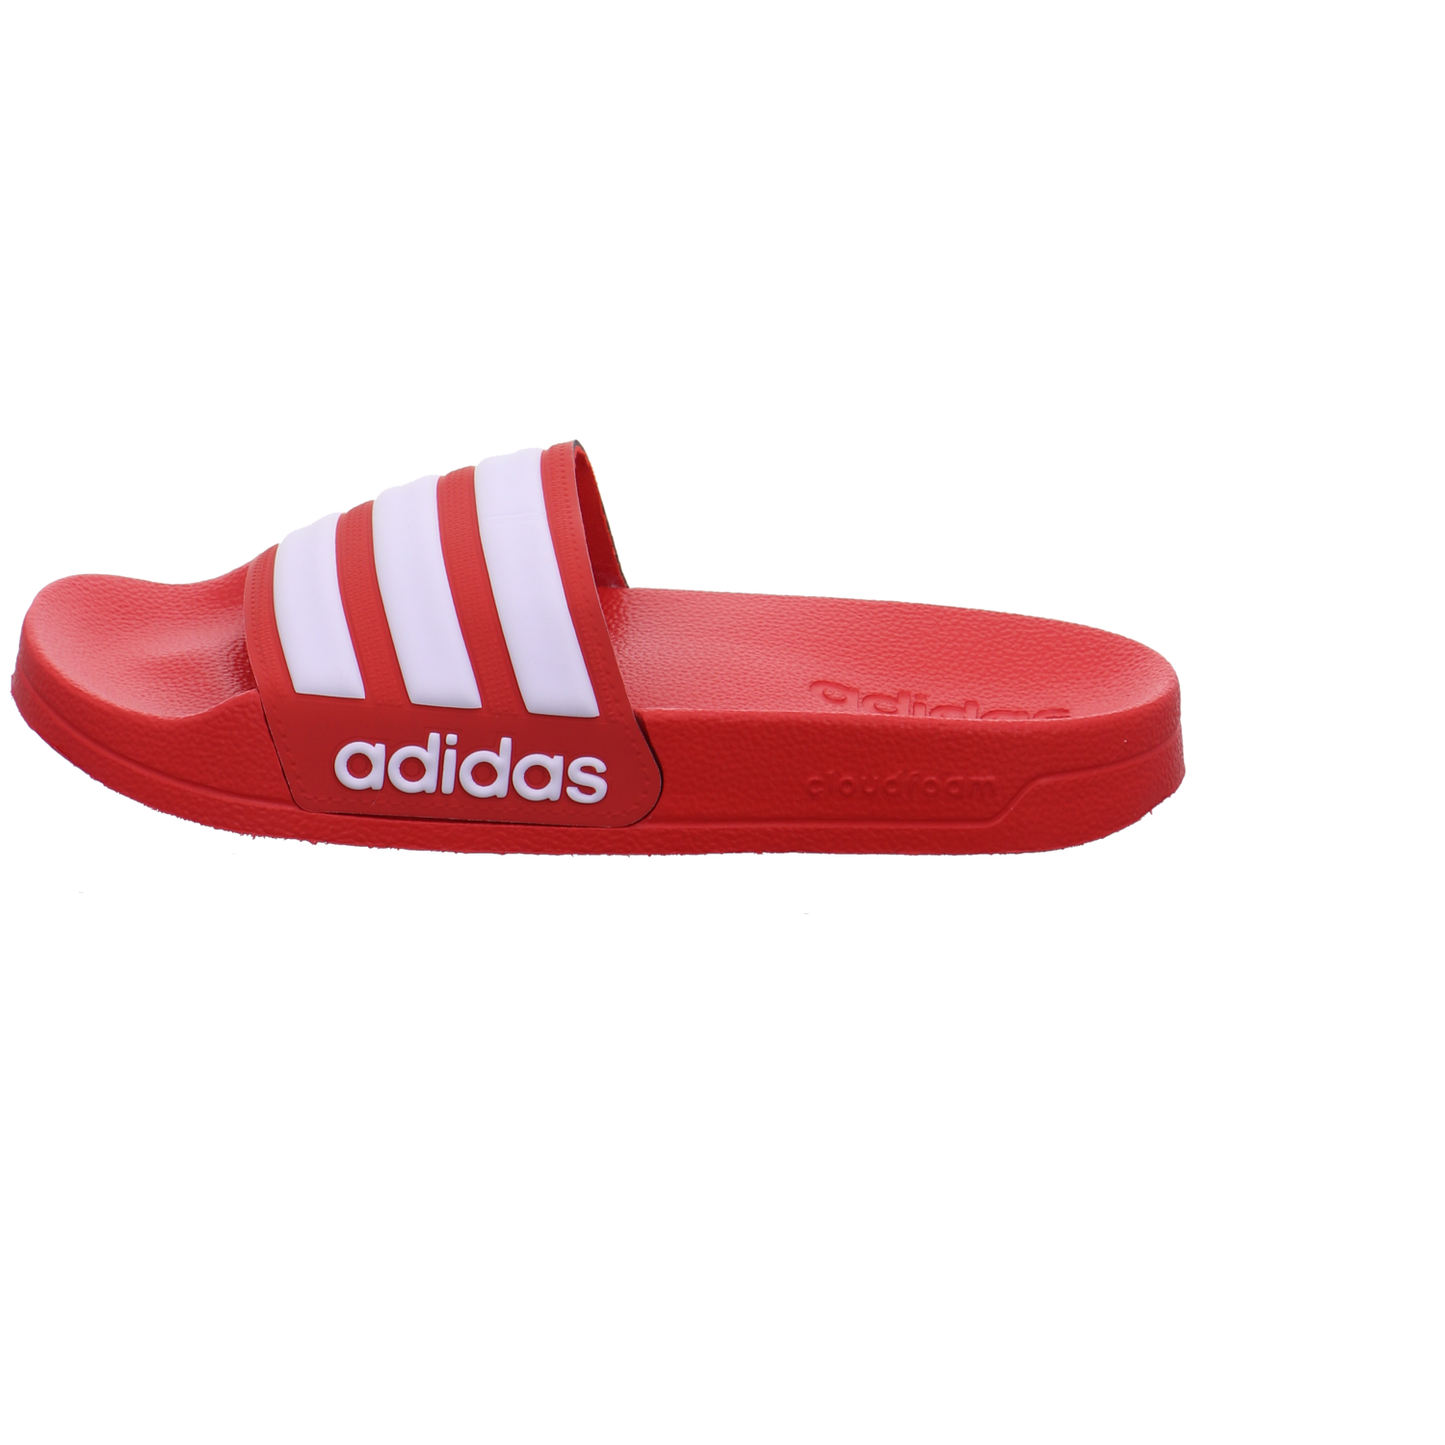 Adidas Schuhe  rot kombi Bild1